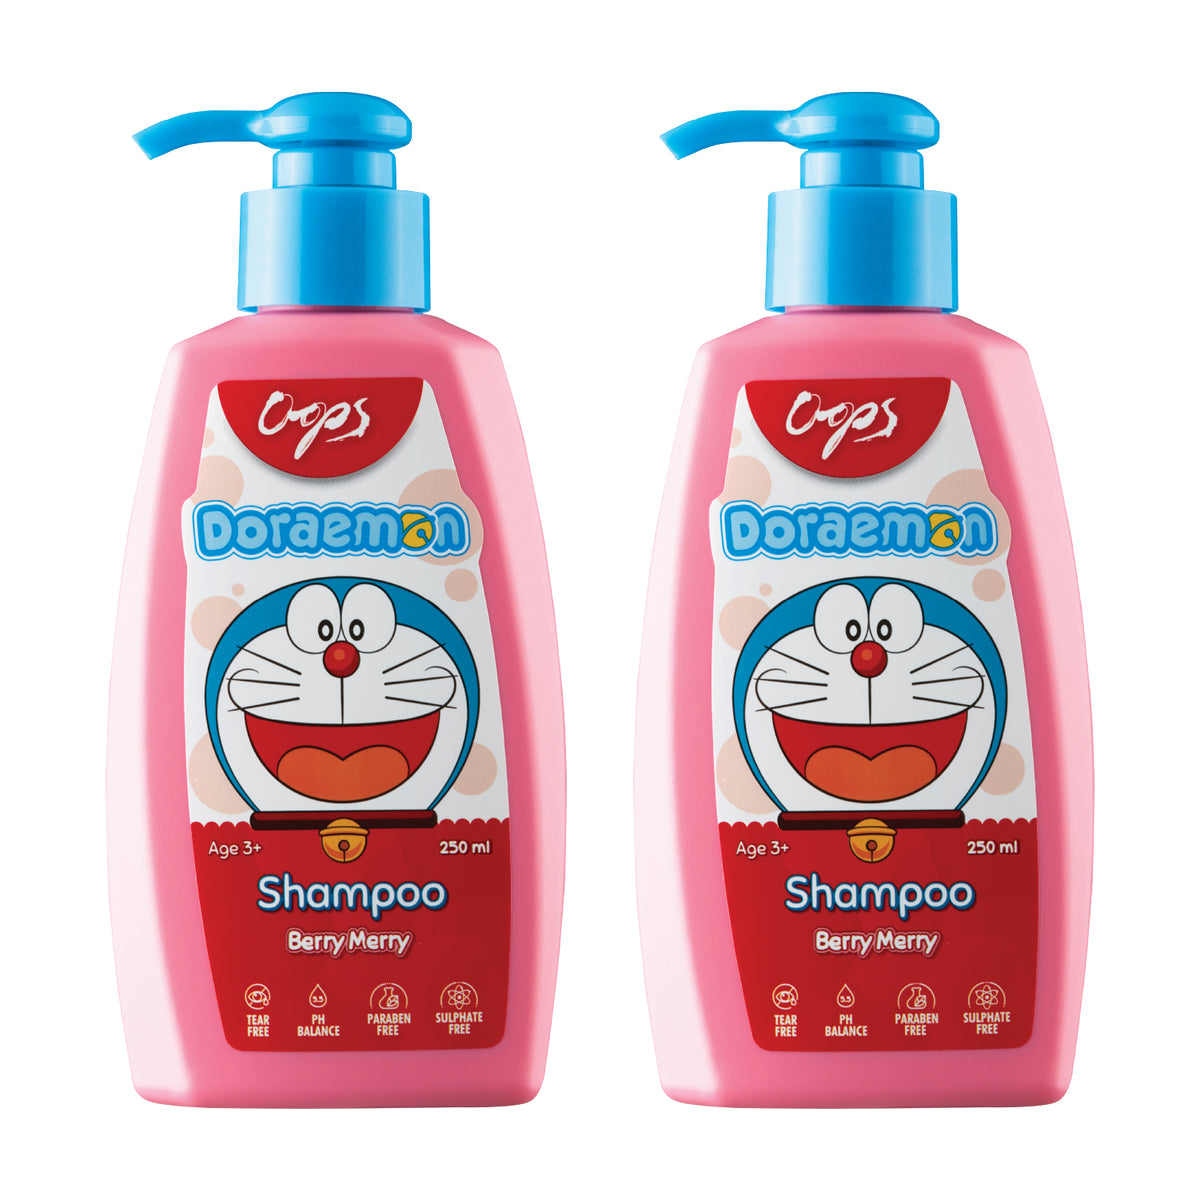 Oops Doraemon Shampoo - Berry Merry, 250ml : Buy 1 Get 1 Free! Gardenia Cosmotrade LLP